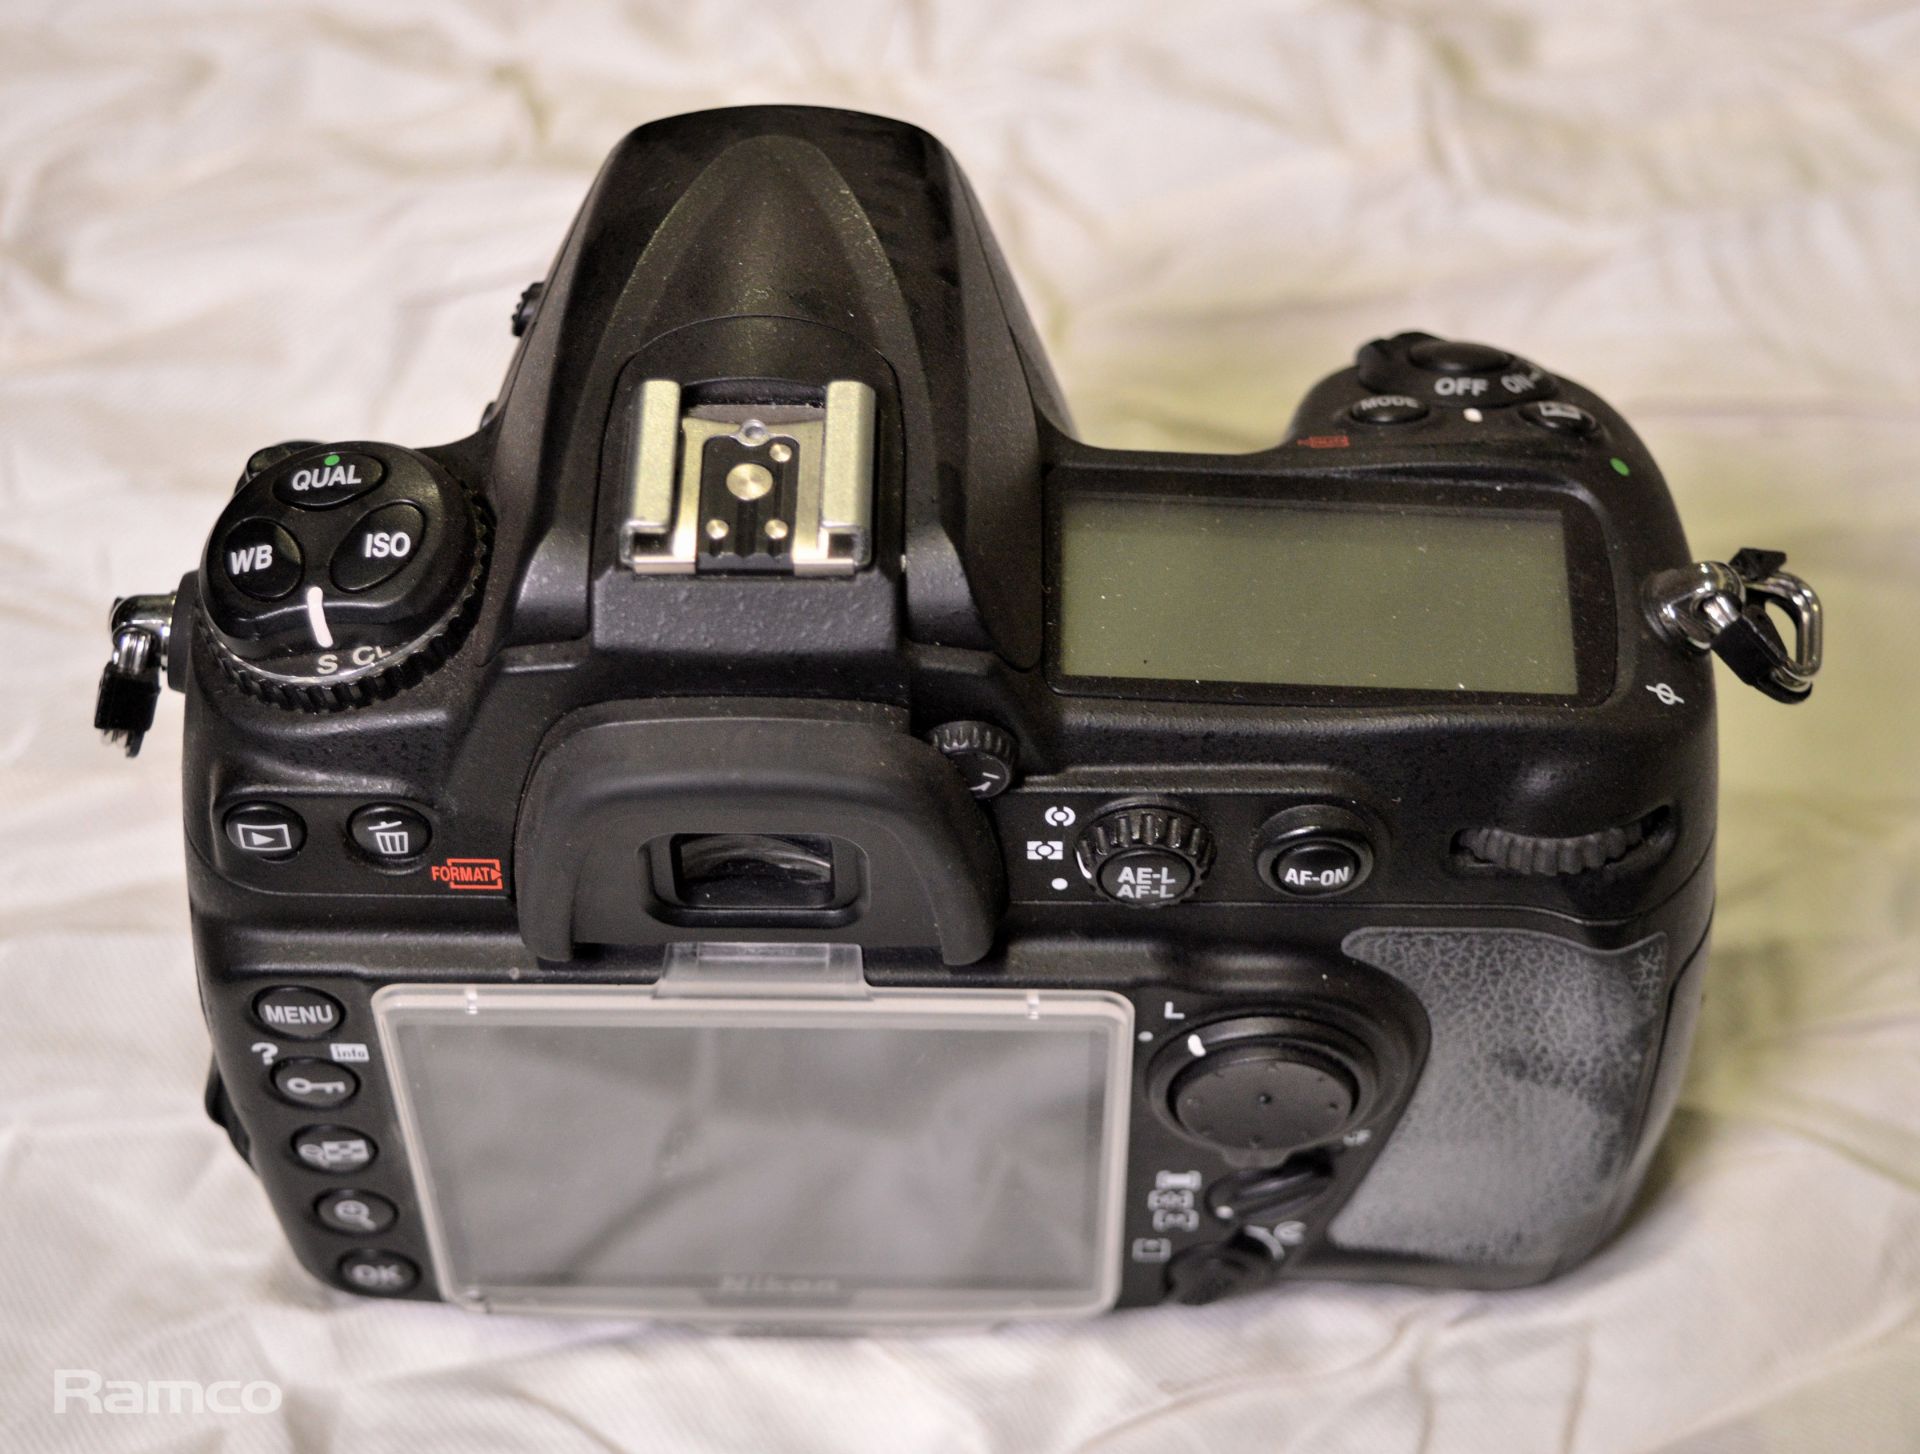 Nikon D300 SLR Digital Camera Body - Image 5 of 6